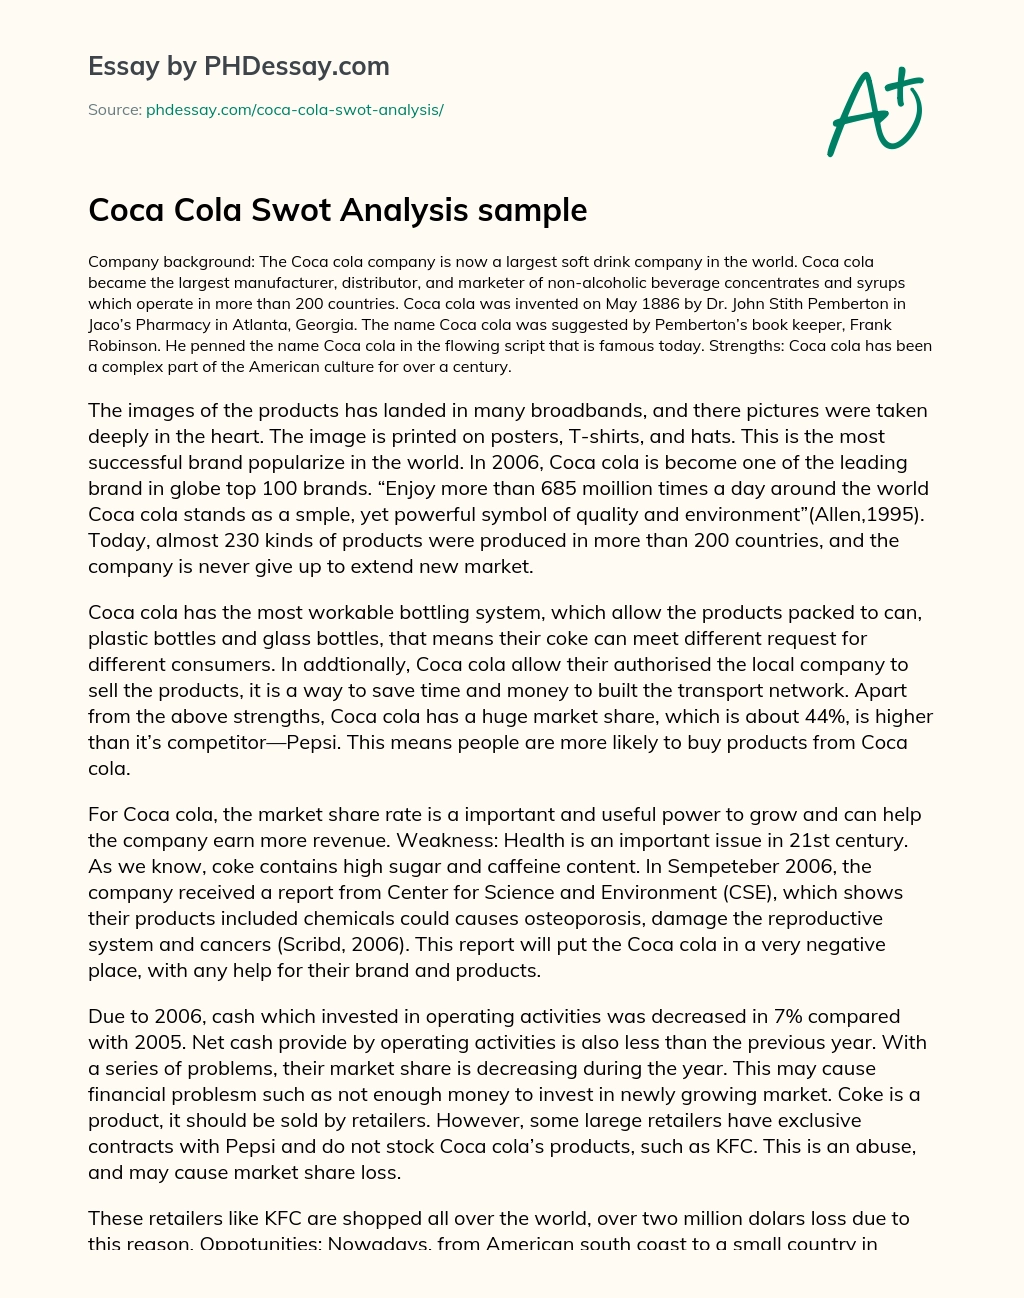 Coca Cola Swot Analysis sample essay